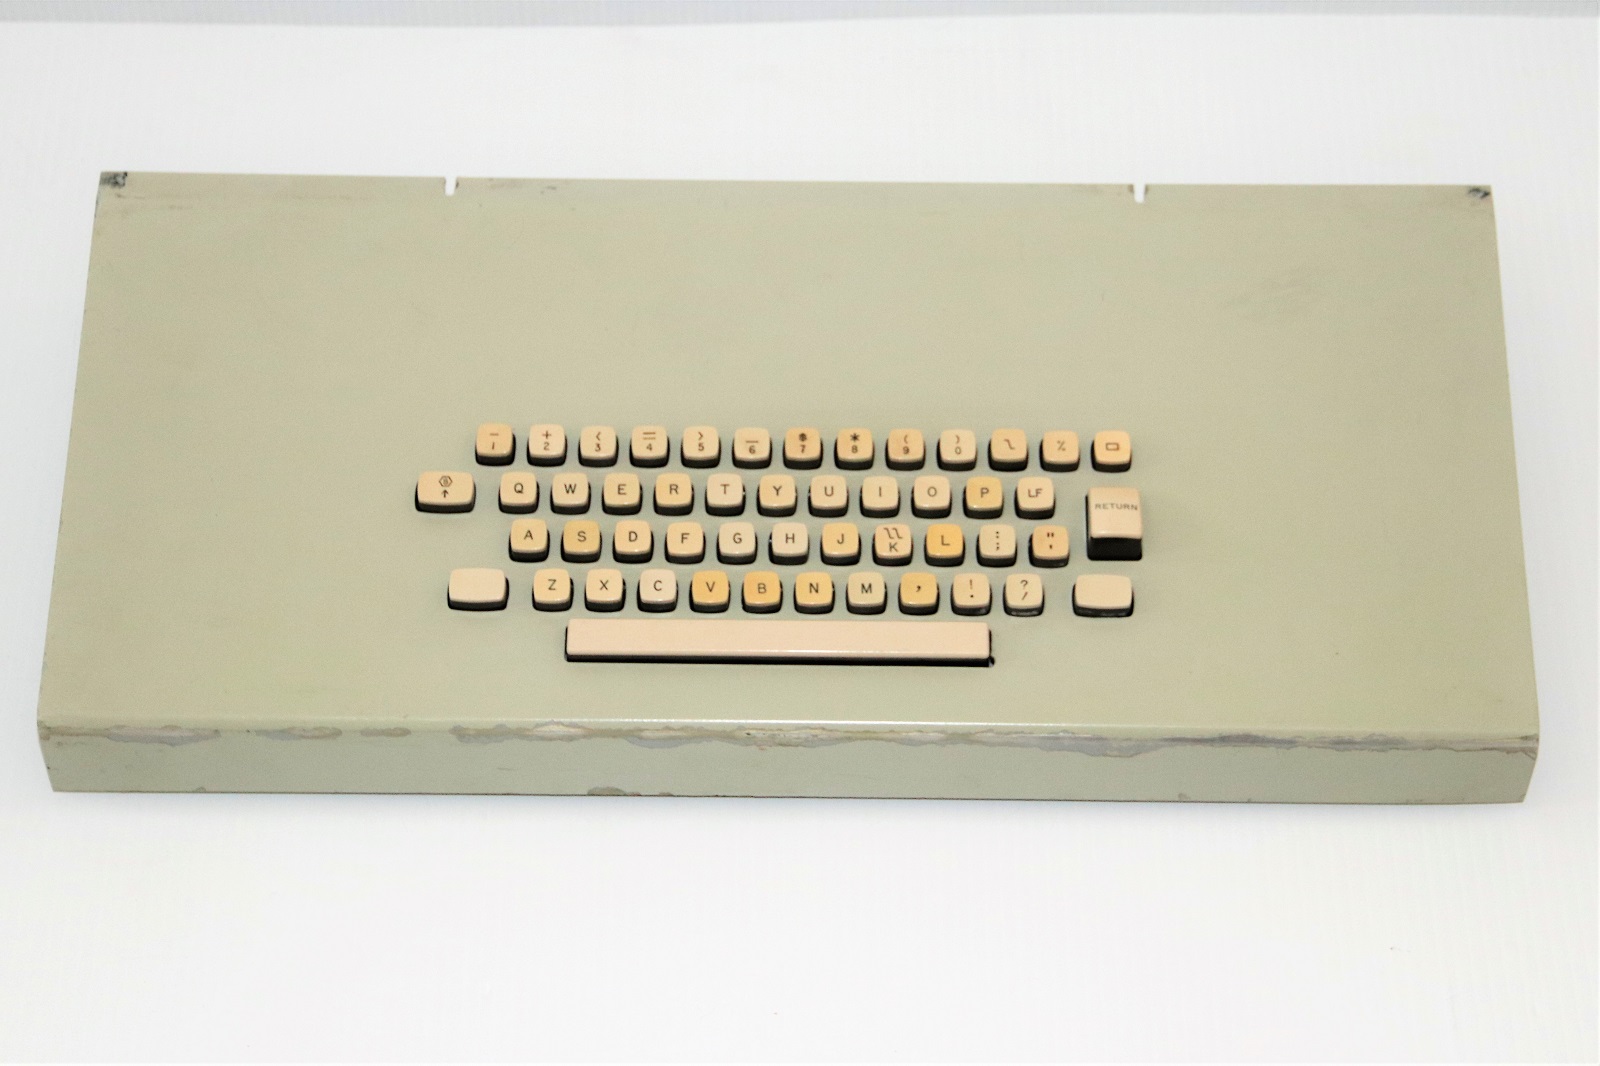 Univac keyboard - top.JPG